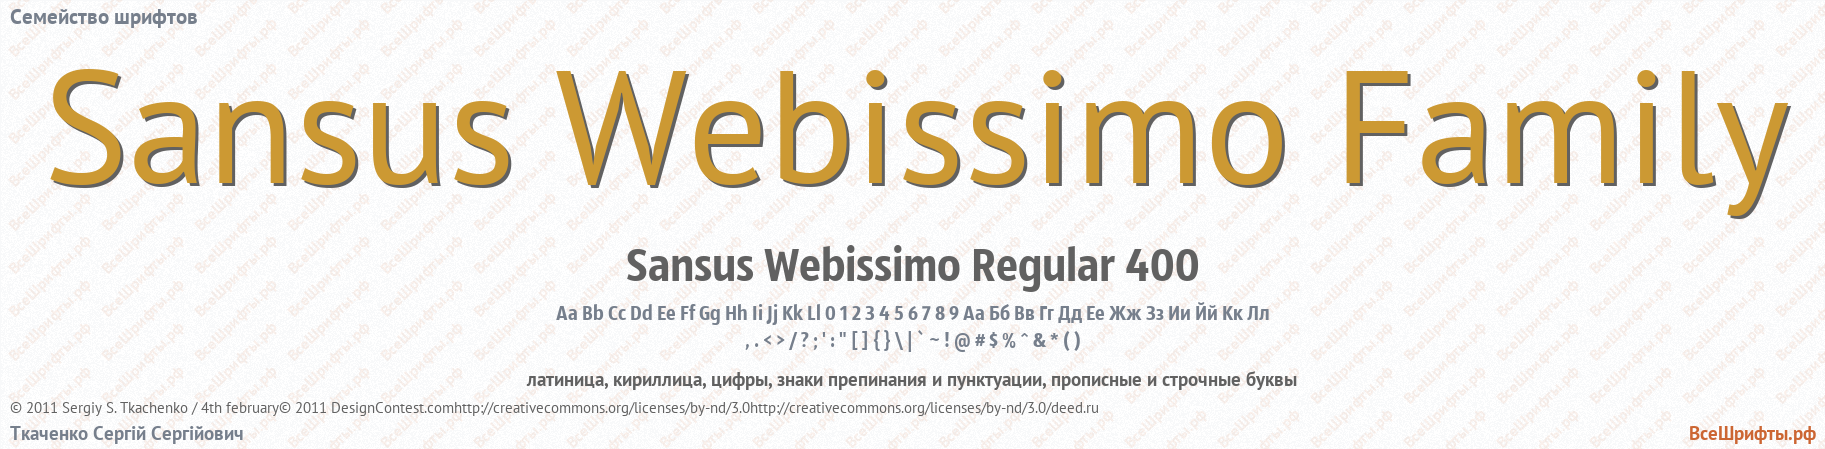 Семейство шрифтов Sansus Webissimo Family